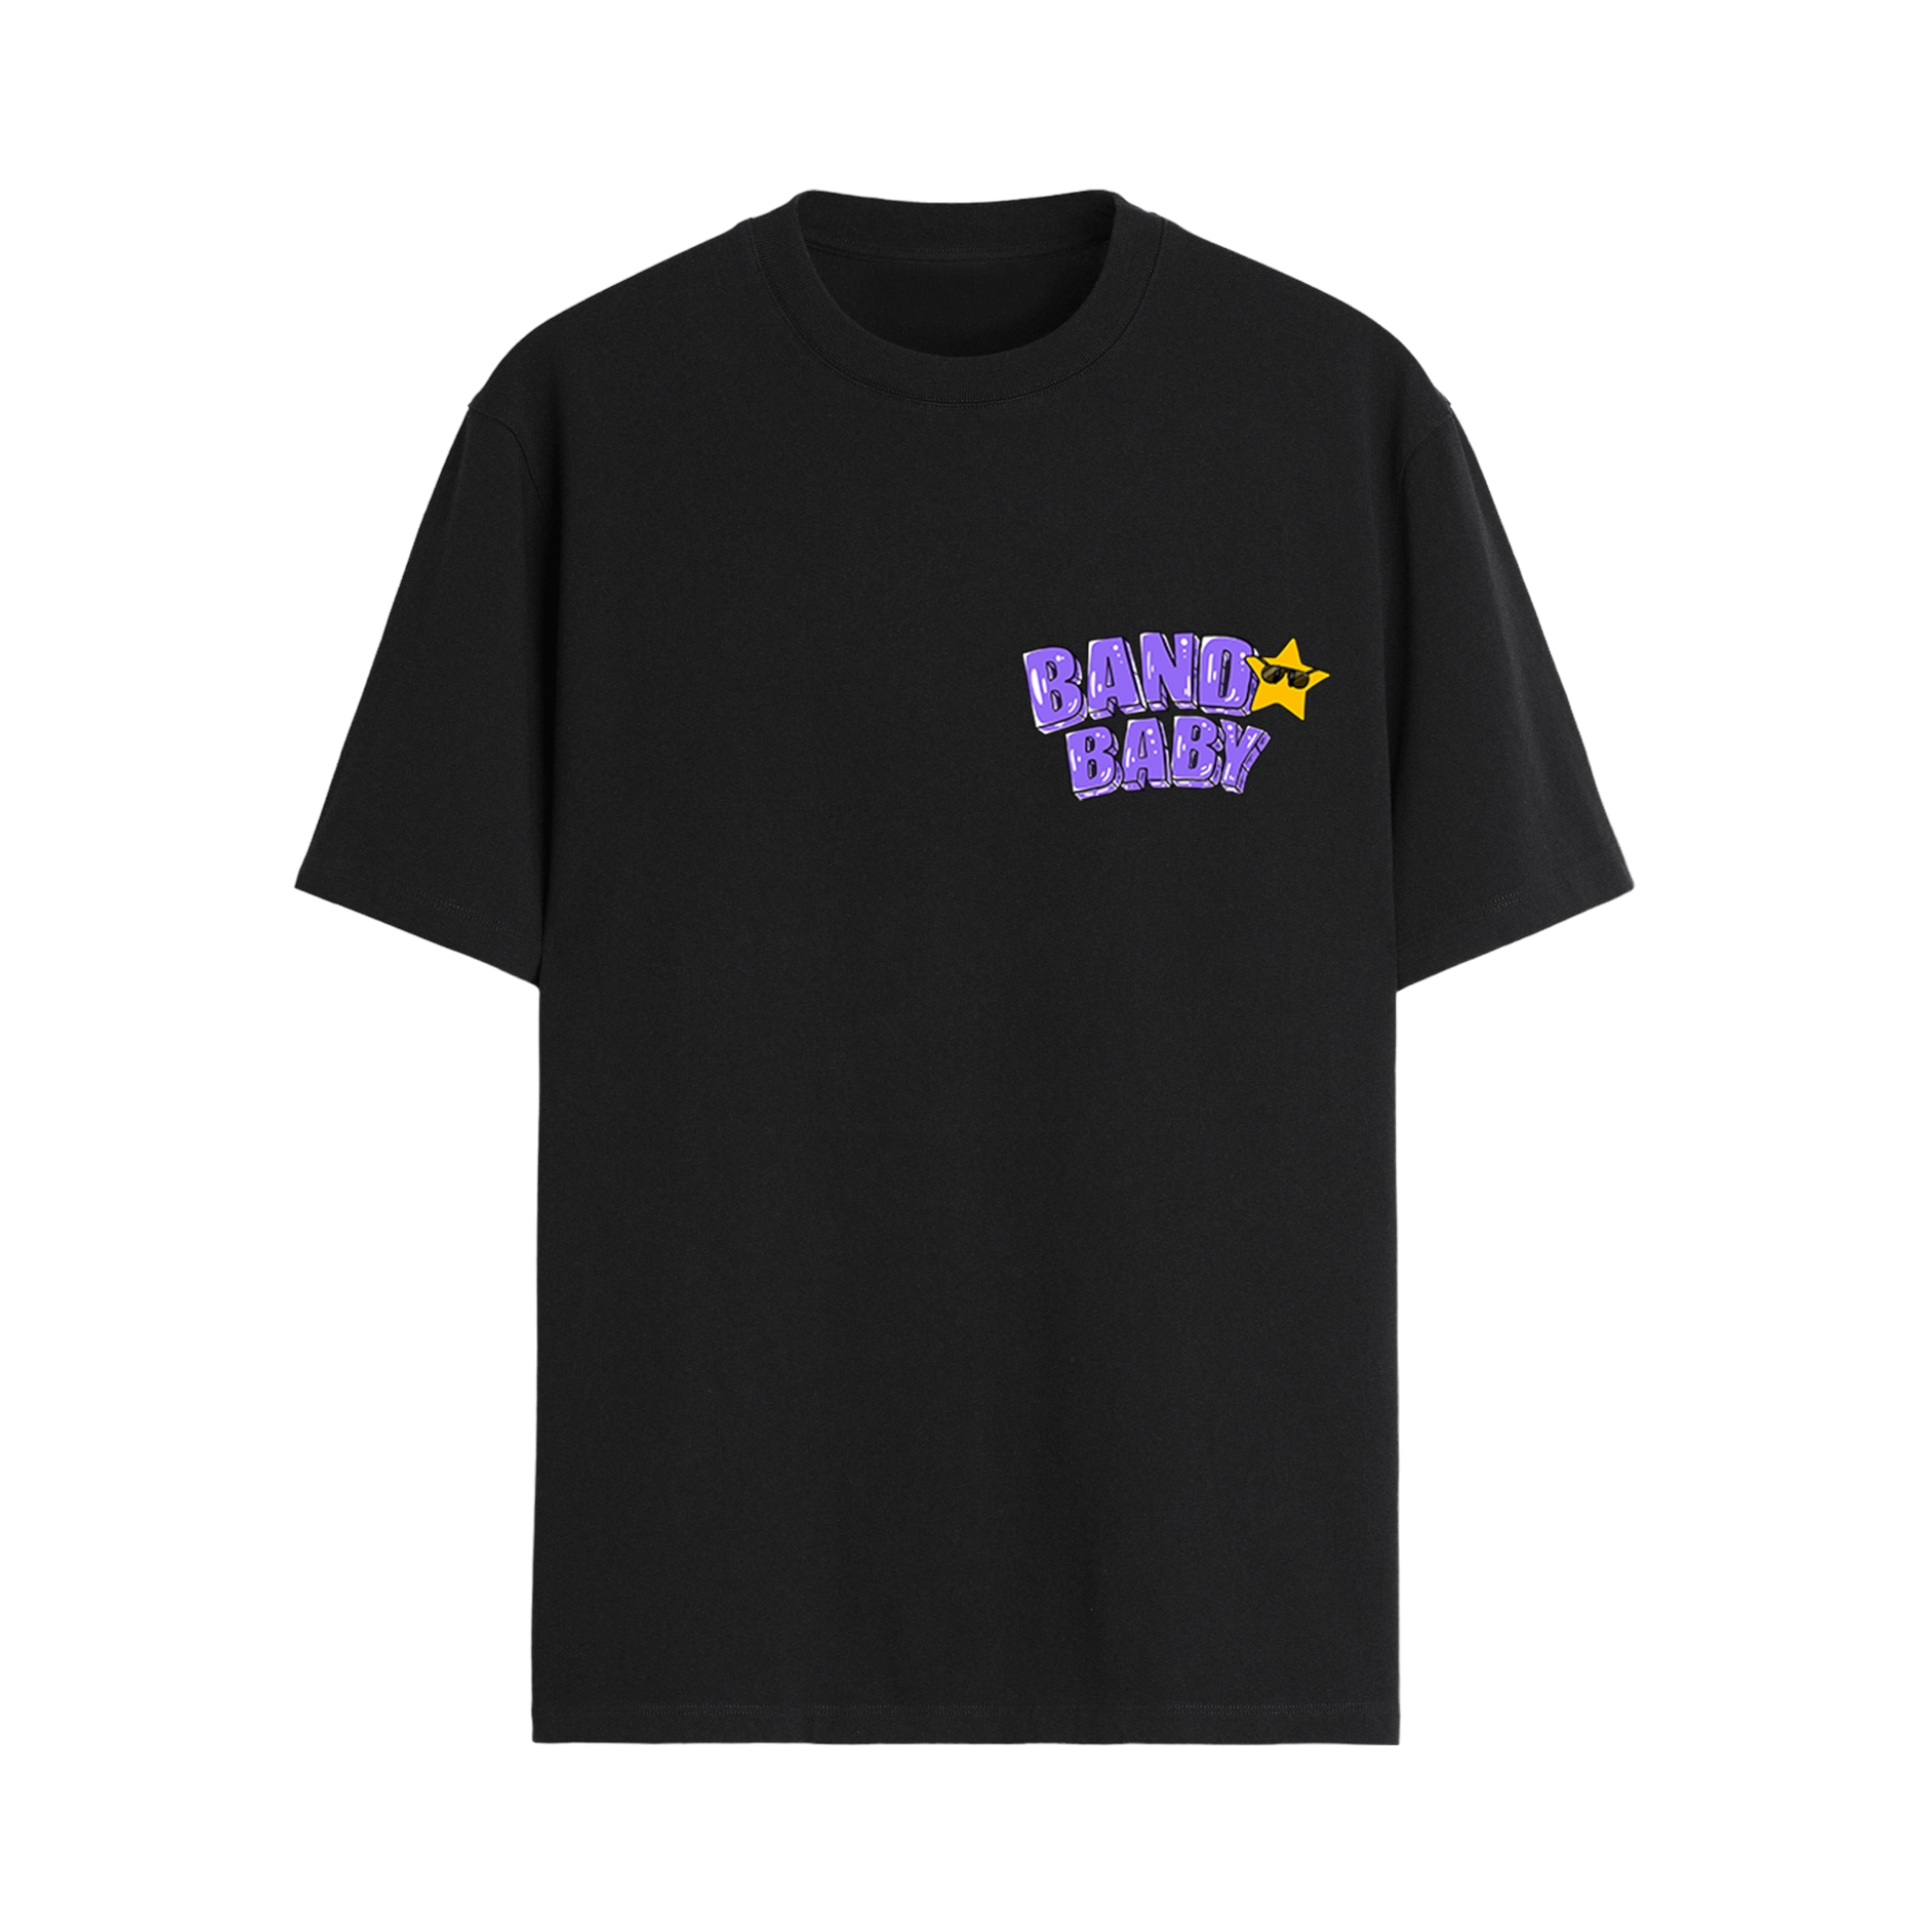 Turn Pain Into Power T-shirt - Bando Baby 